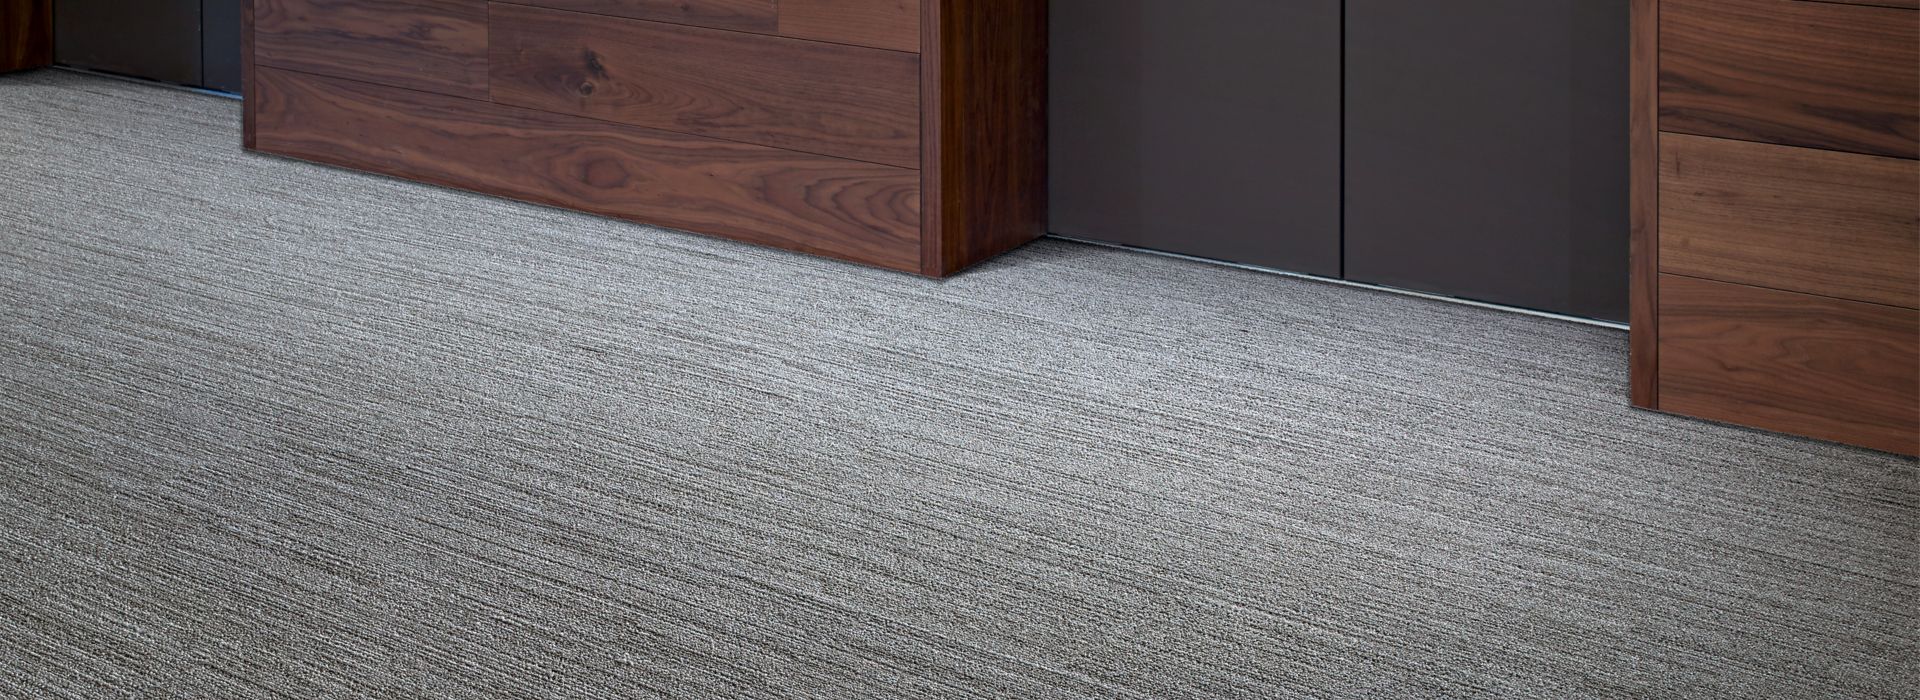 Interface CE171 plank carpet tile in elevator bank numéro d’image 1